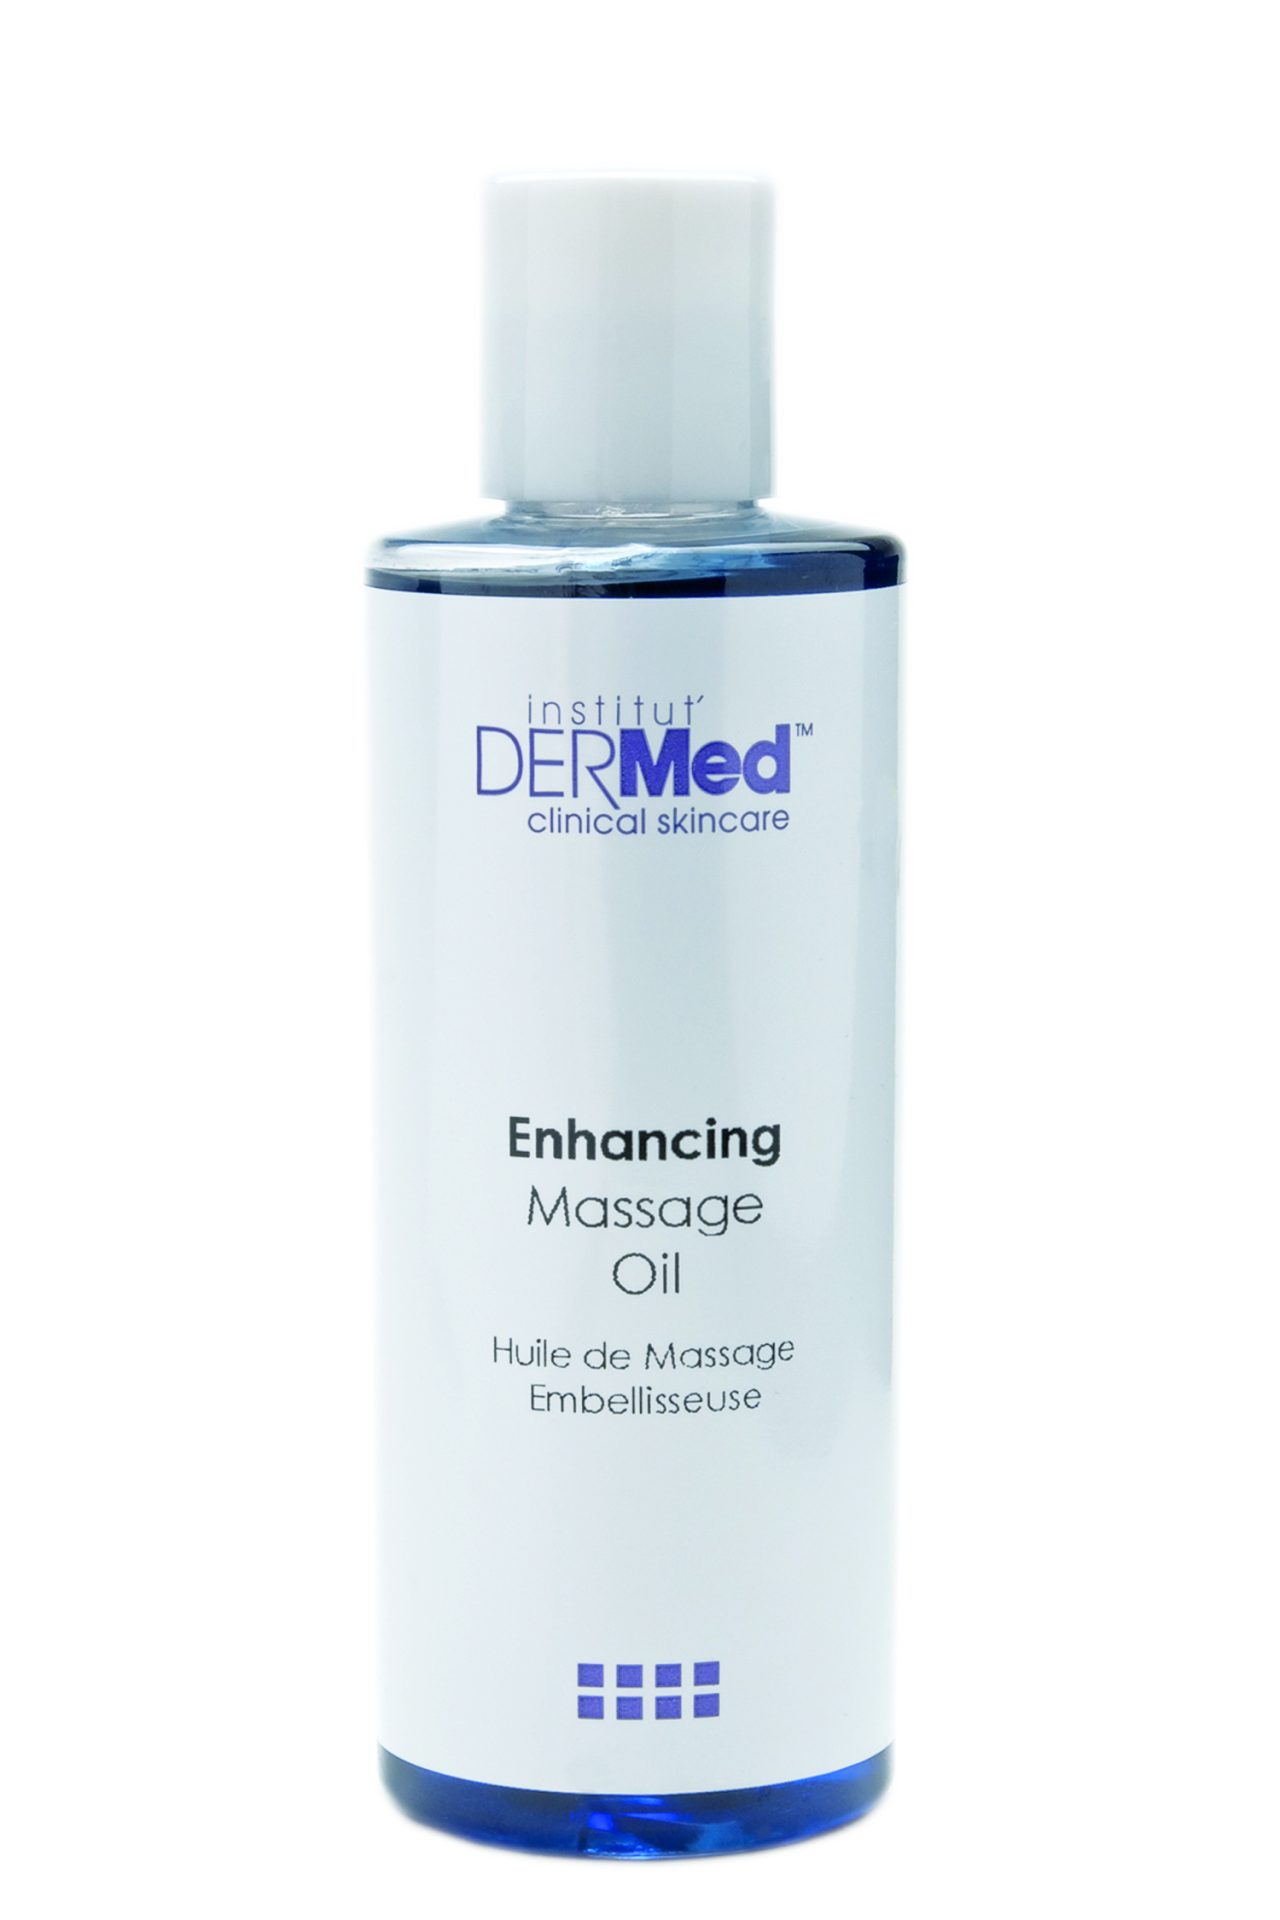 Institut' DERMed Clinical Skincare Introduces Enhancing Massage Oil, MASSAGE Magazine